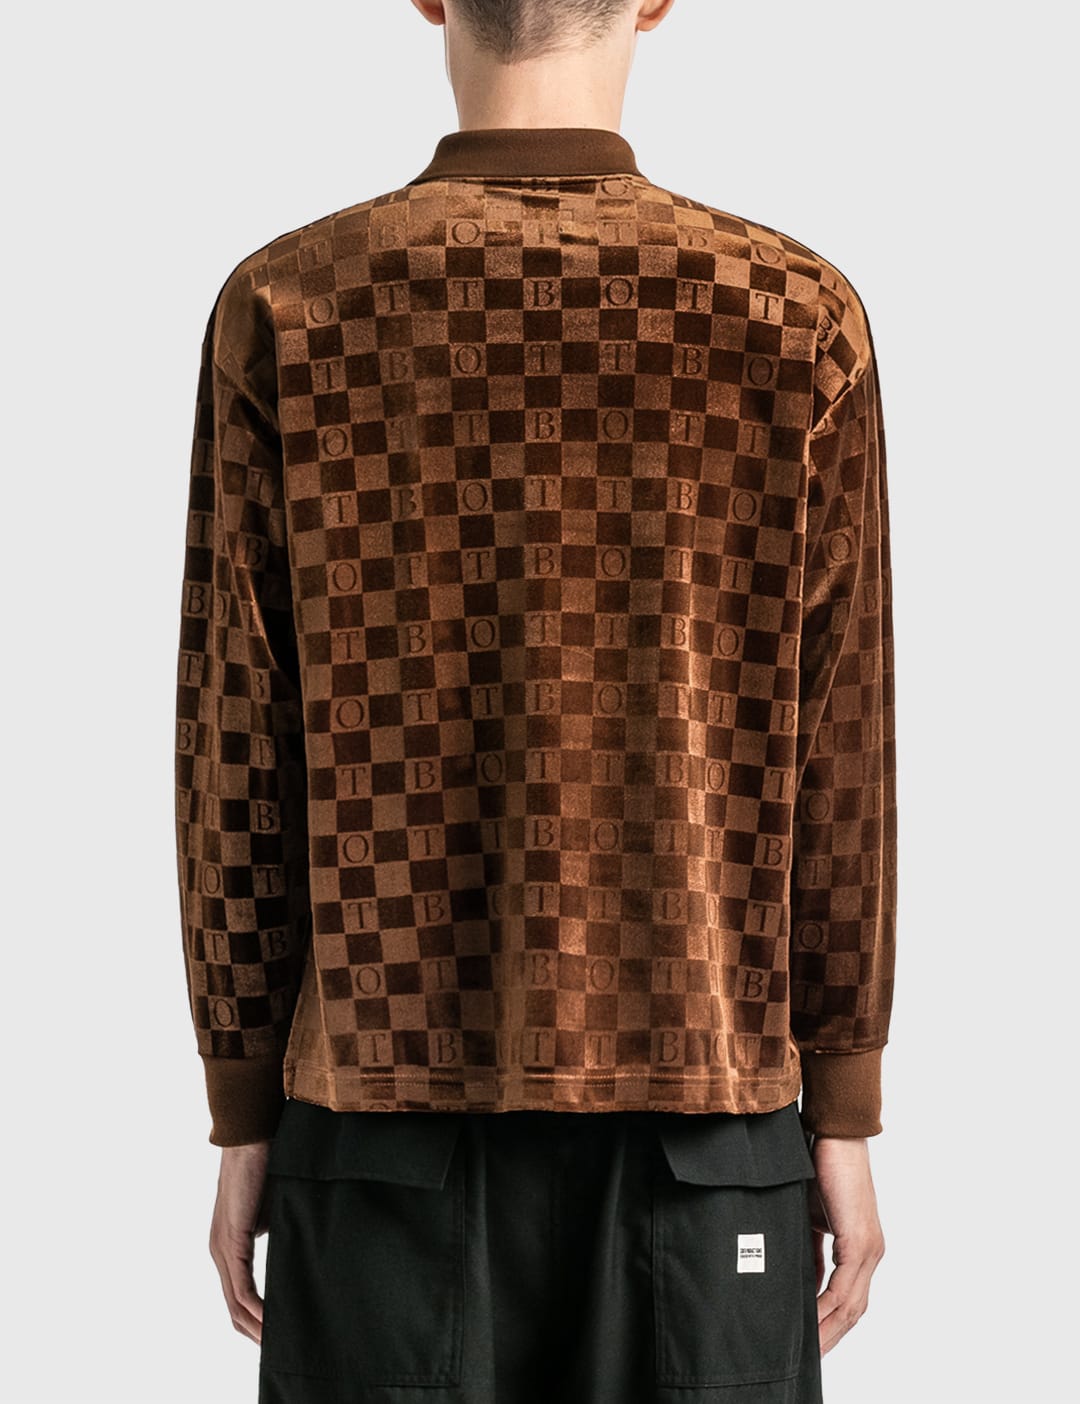 BoTT - Checkerboard Velour Polo Shirt | HBX - Globally Curated